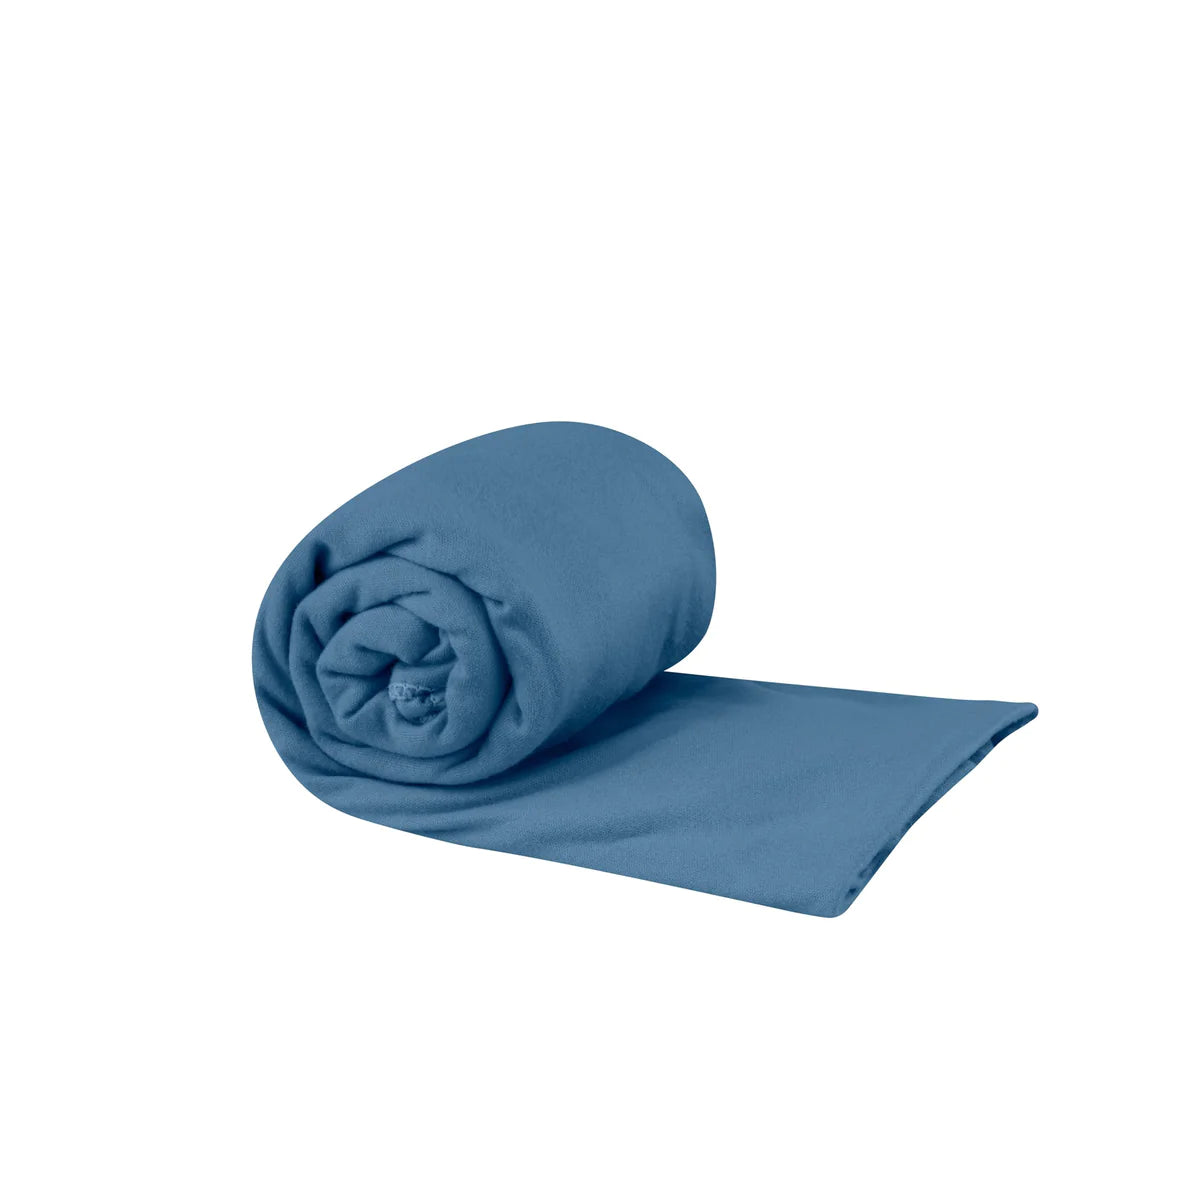 Sea to Summit - Pocket Towel Medium - Moonlight Blue